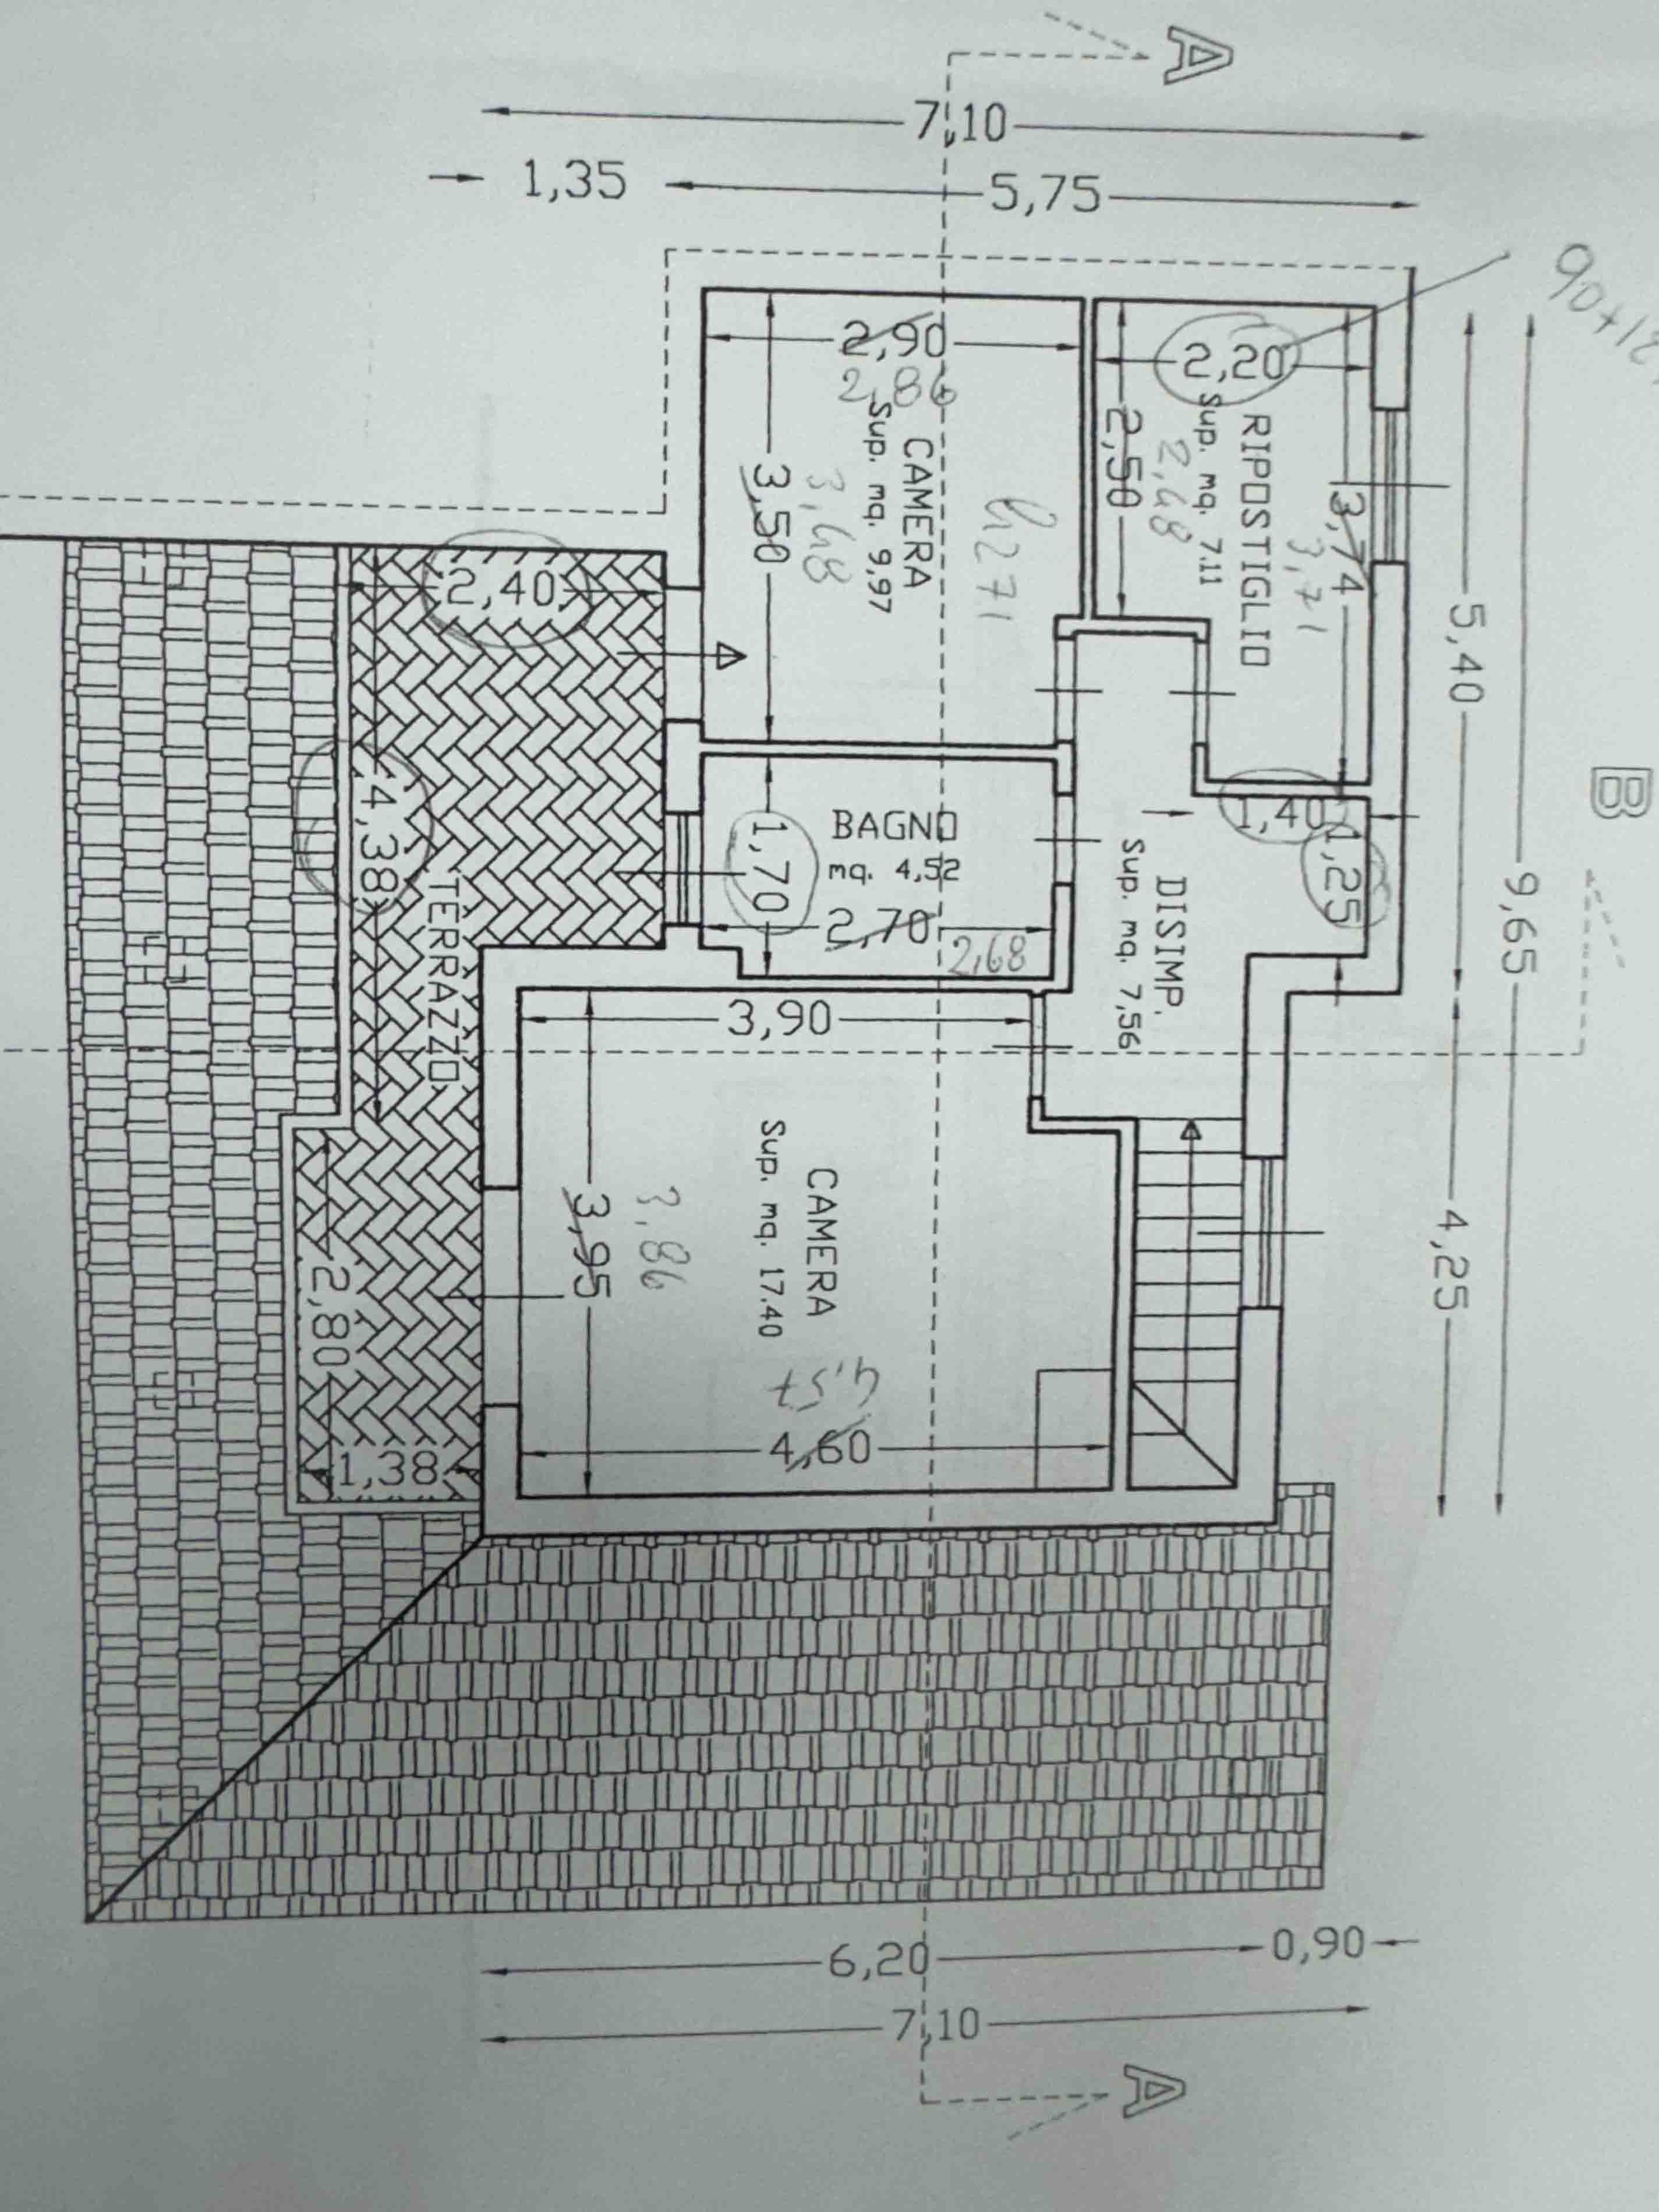 Semi-detached house for sale, ref. 28125 (Plan 6/6)